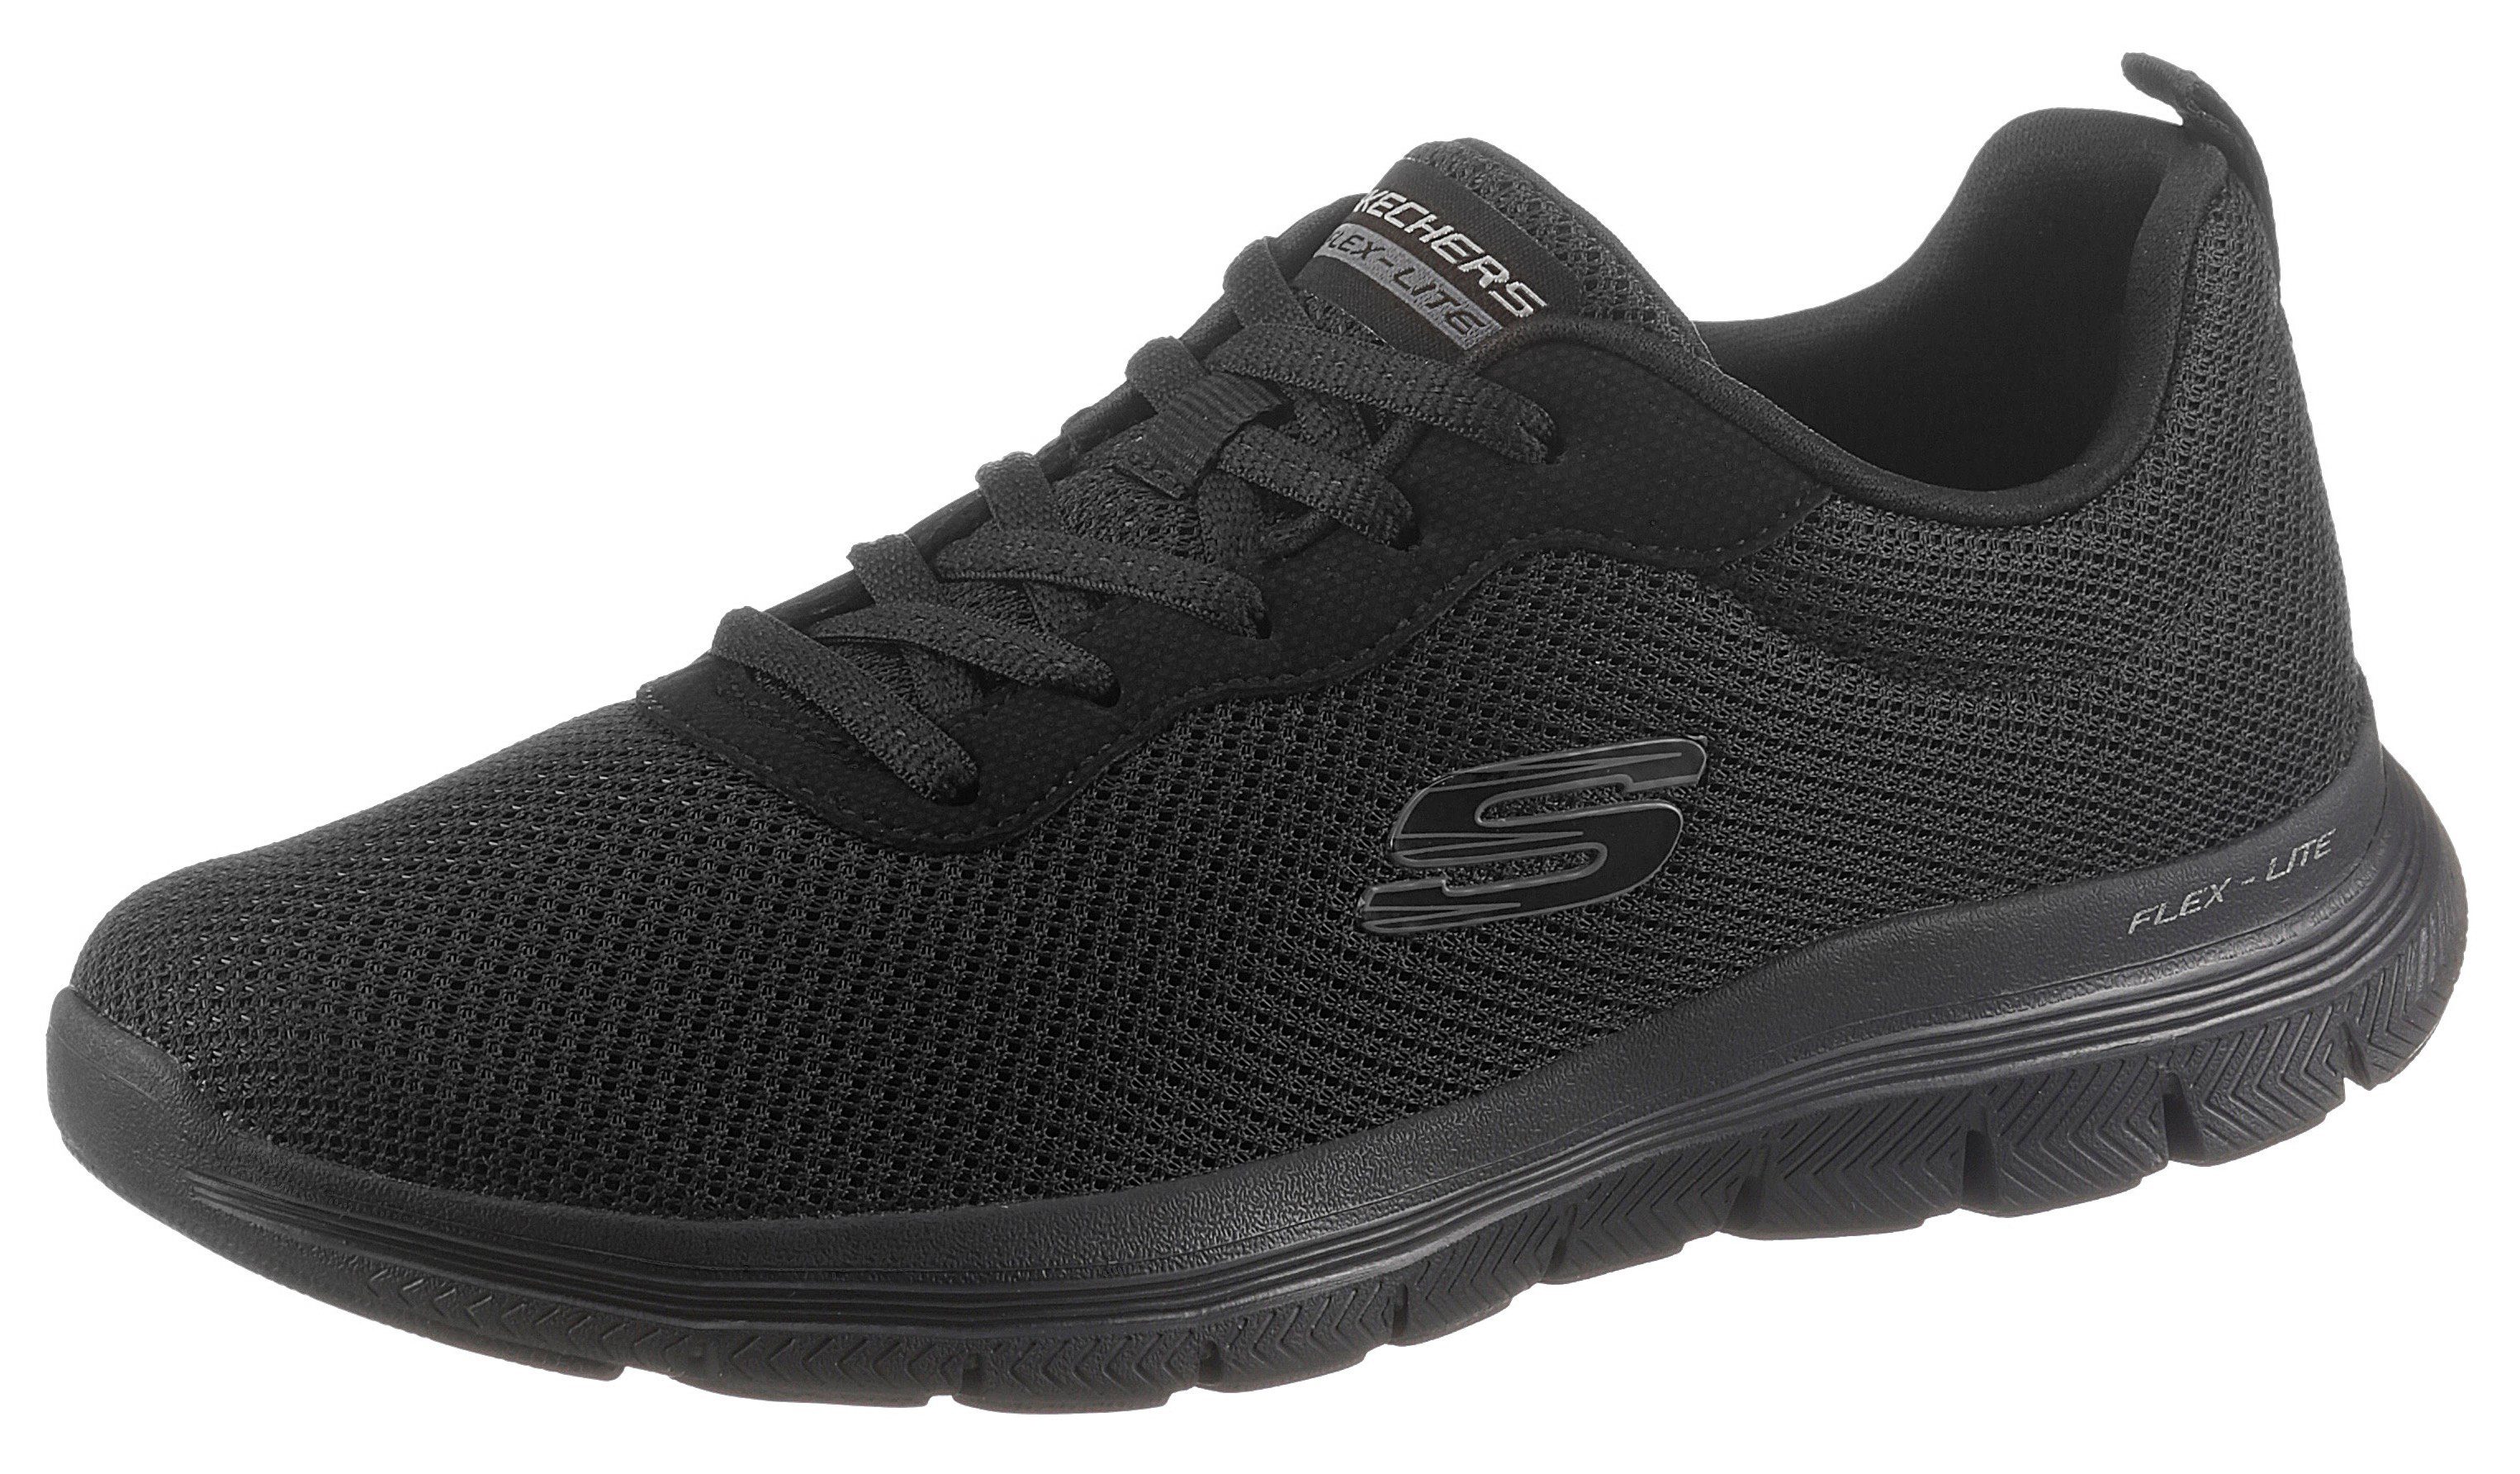 Sneaker schwarz FLEX Foam Memory BRILLINAT mit Ausstattung VIEW Skechers Air-Cooled 4.0 APPEAL